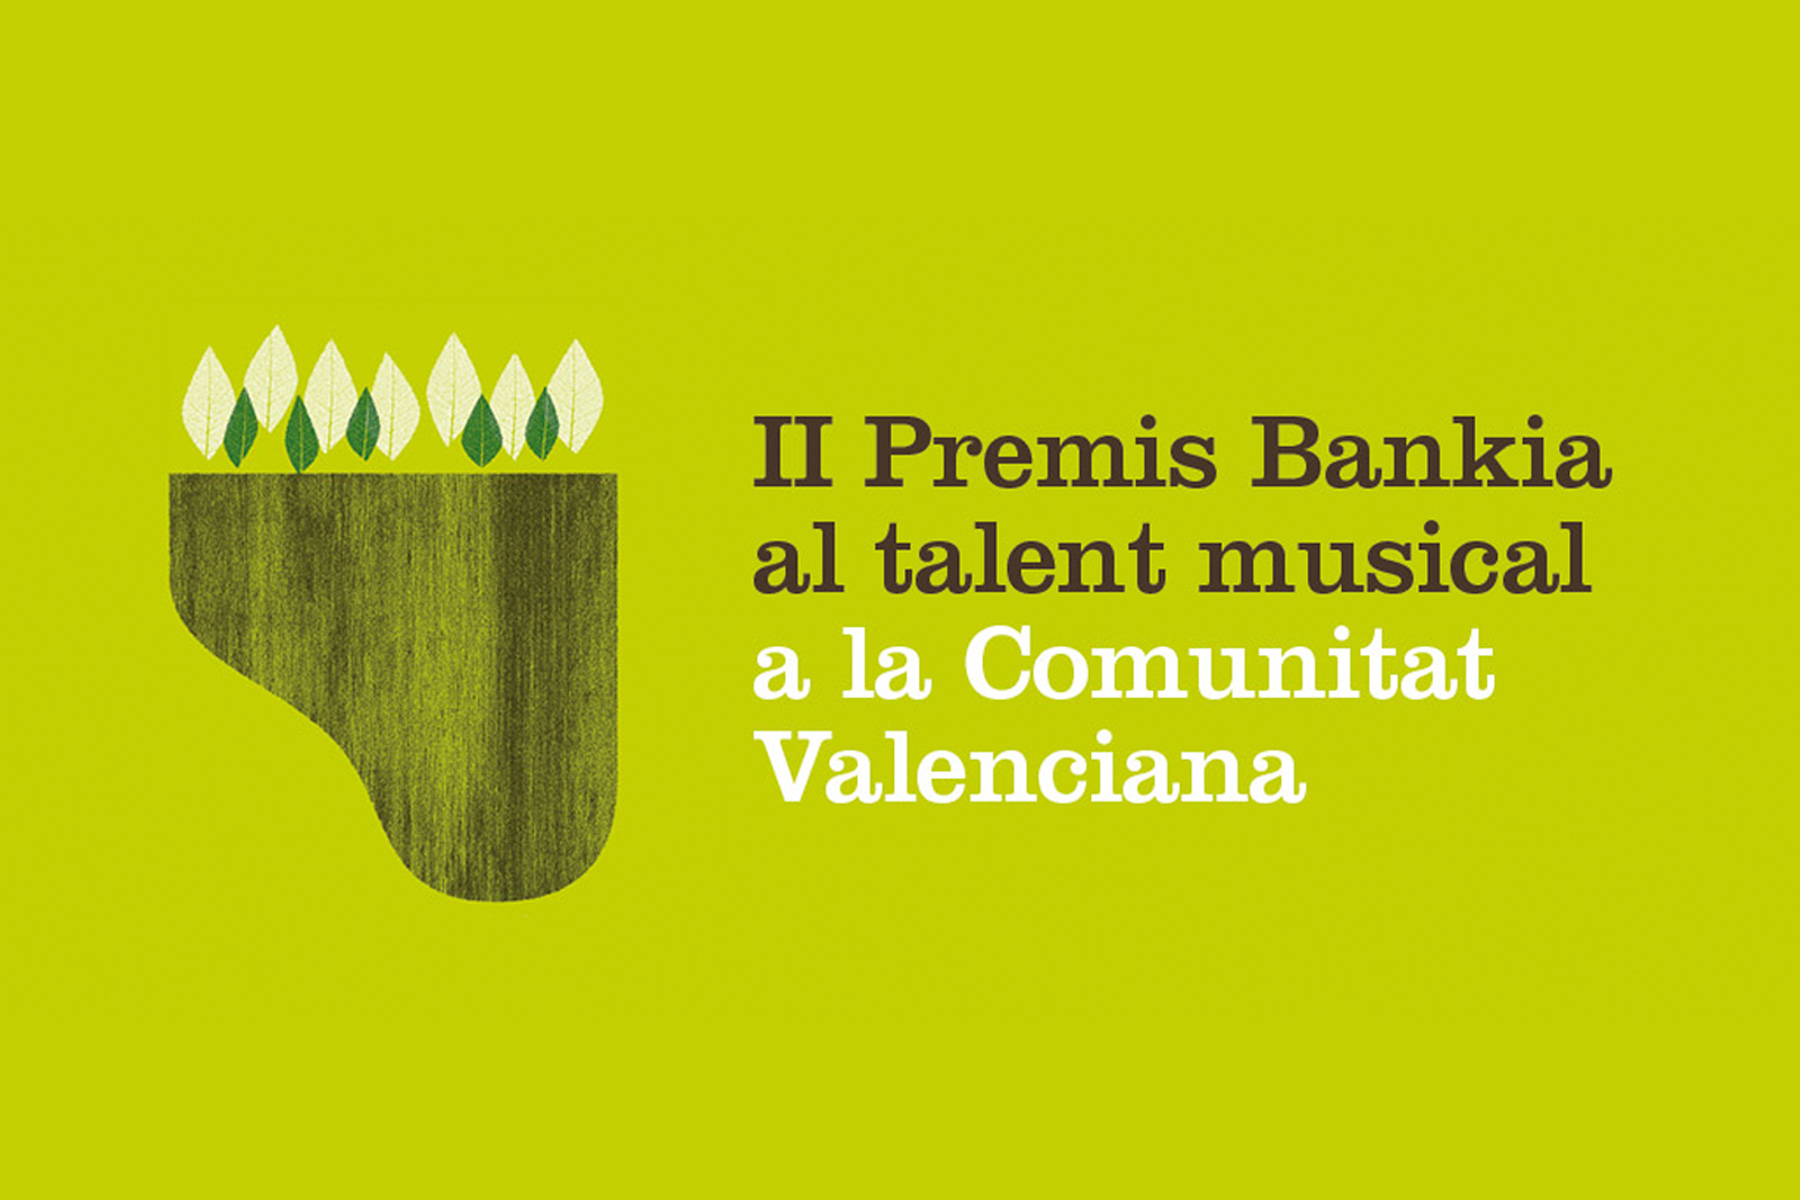 ii-premios-bankia-talento-musical